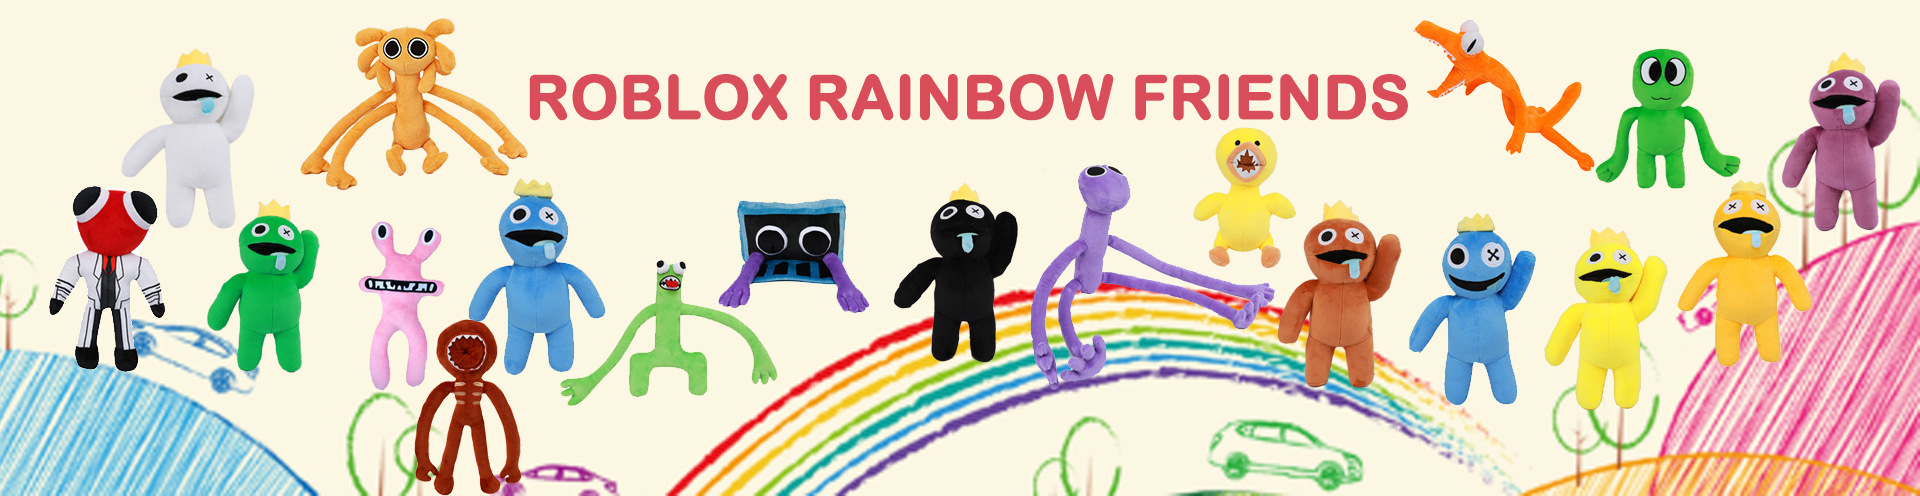 Rainbow Friends ⛄ - Roblox